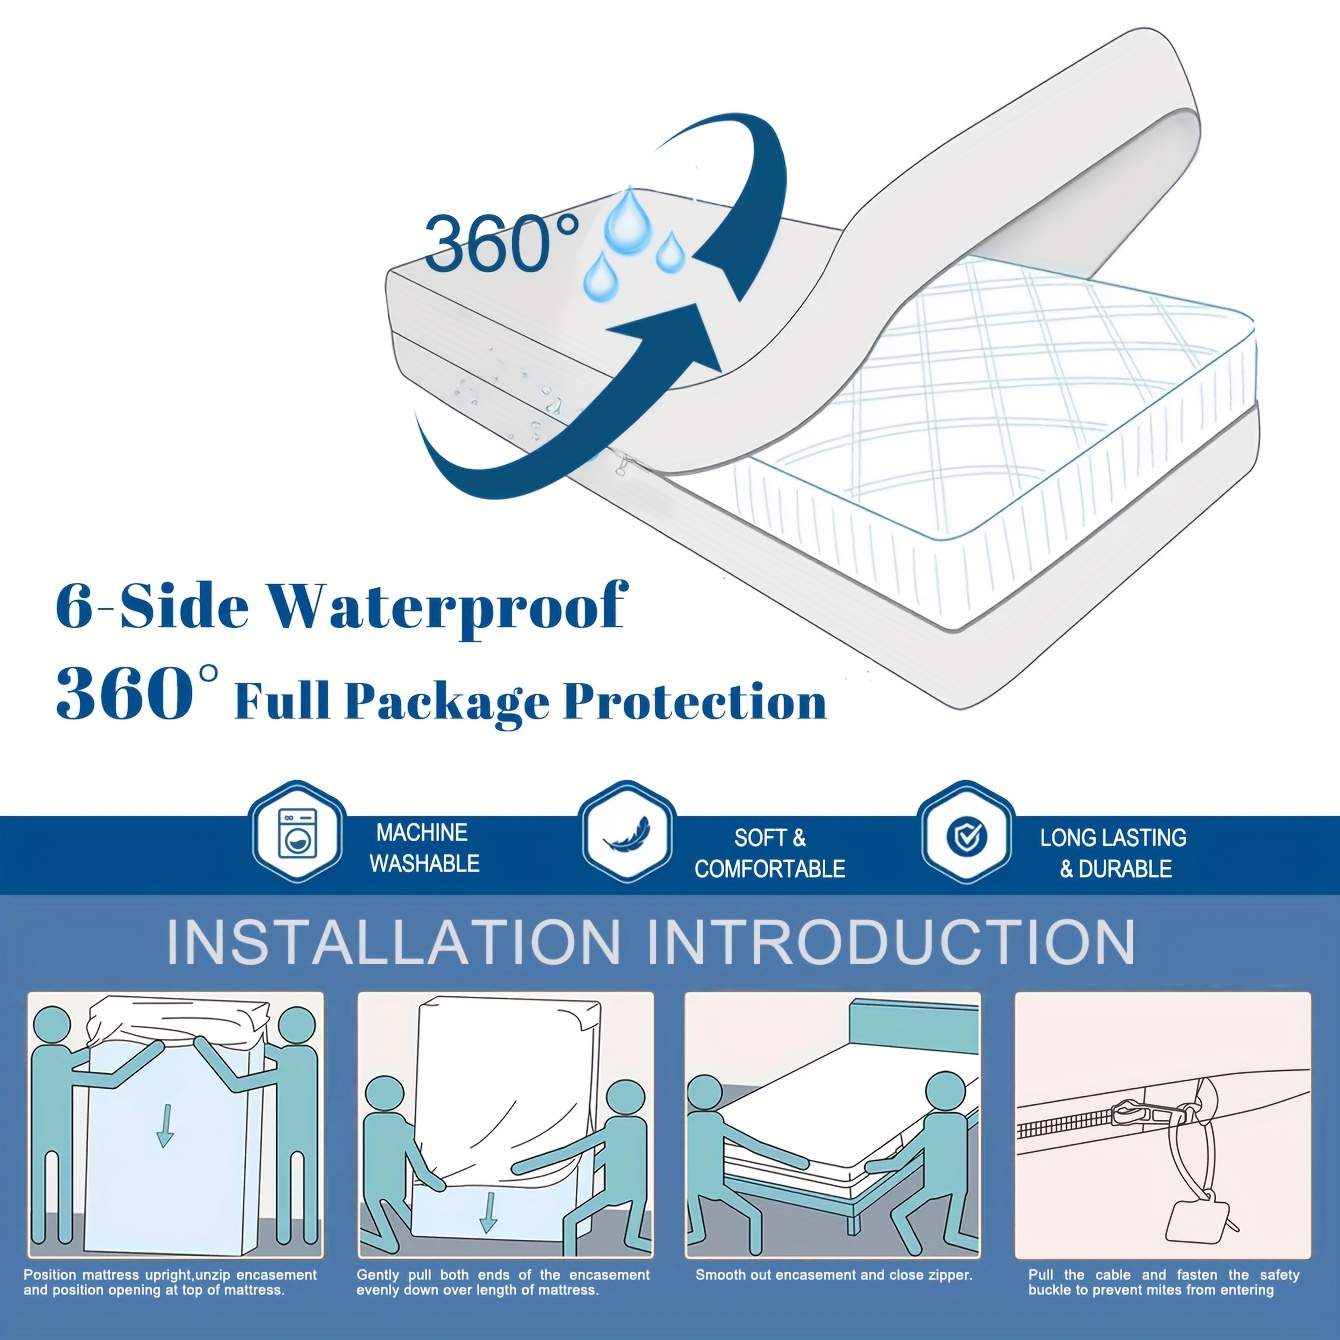 Safest 100% Waterproof Mattress Protector for All Season - Temu